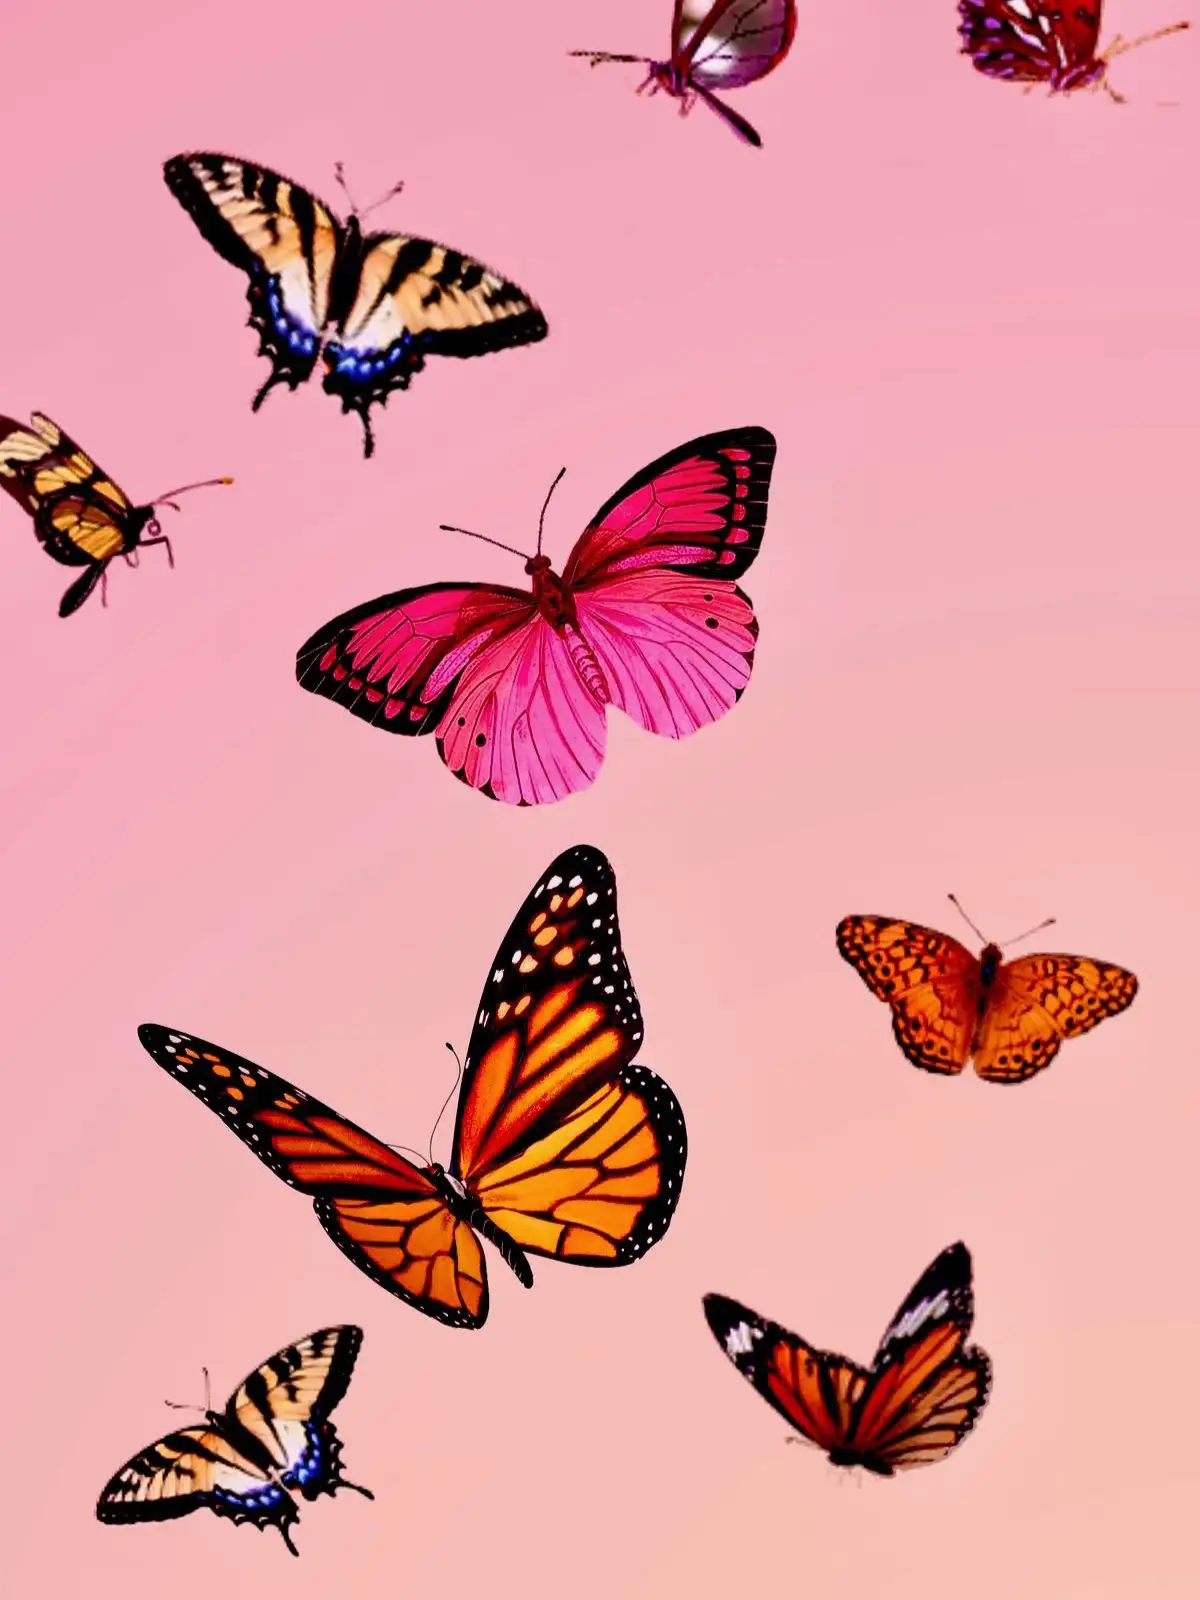  A group of butterflies in flight.